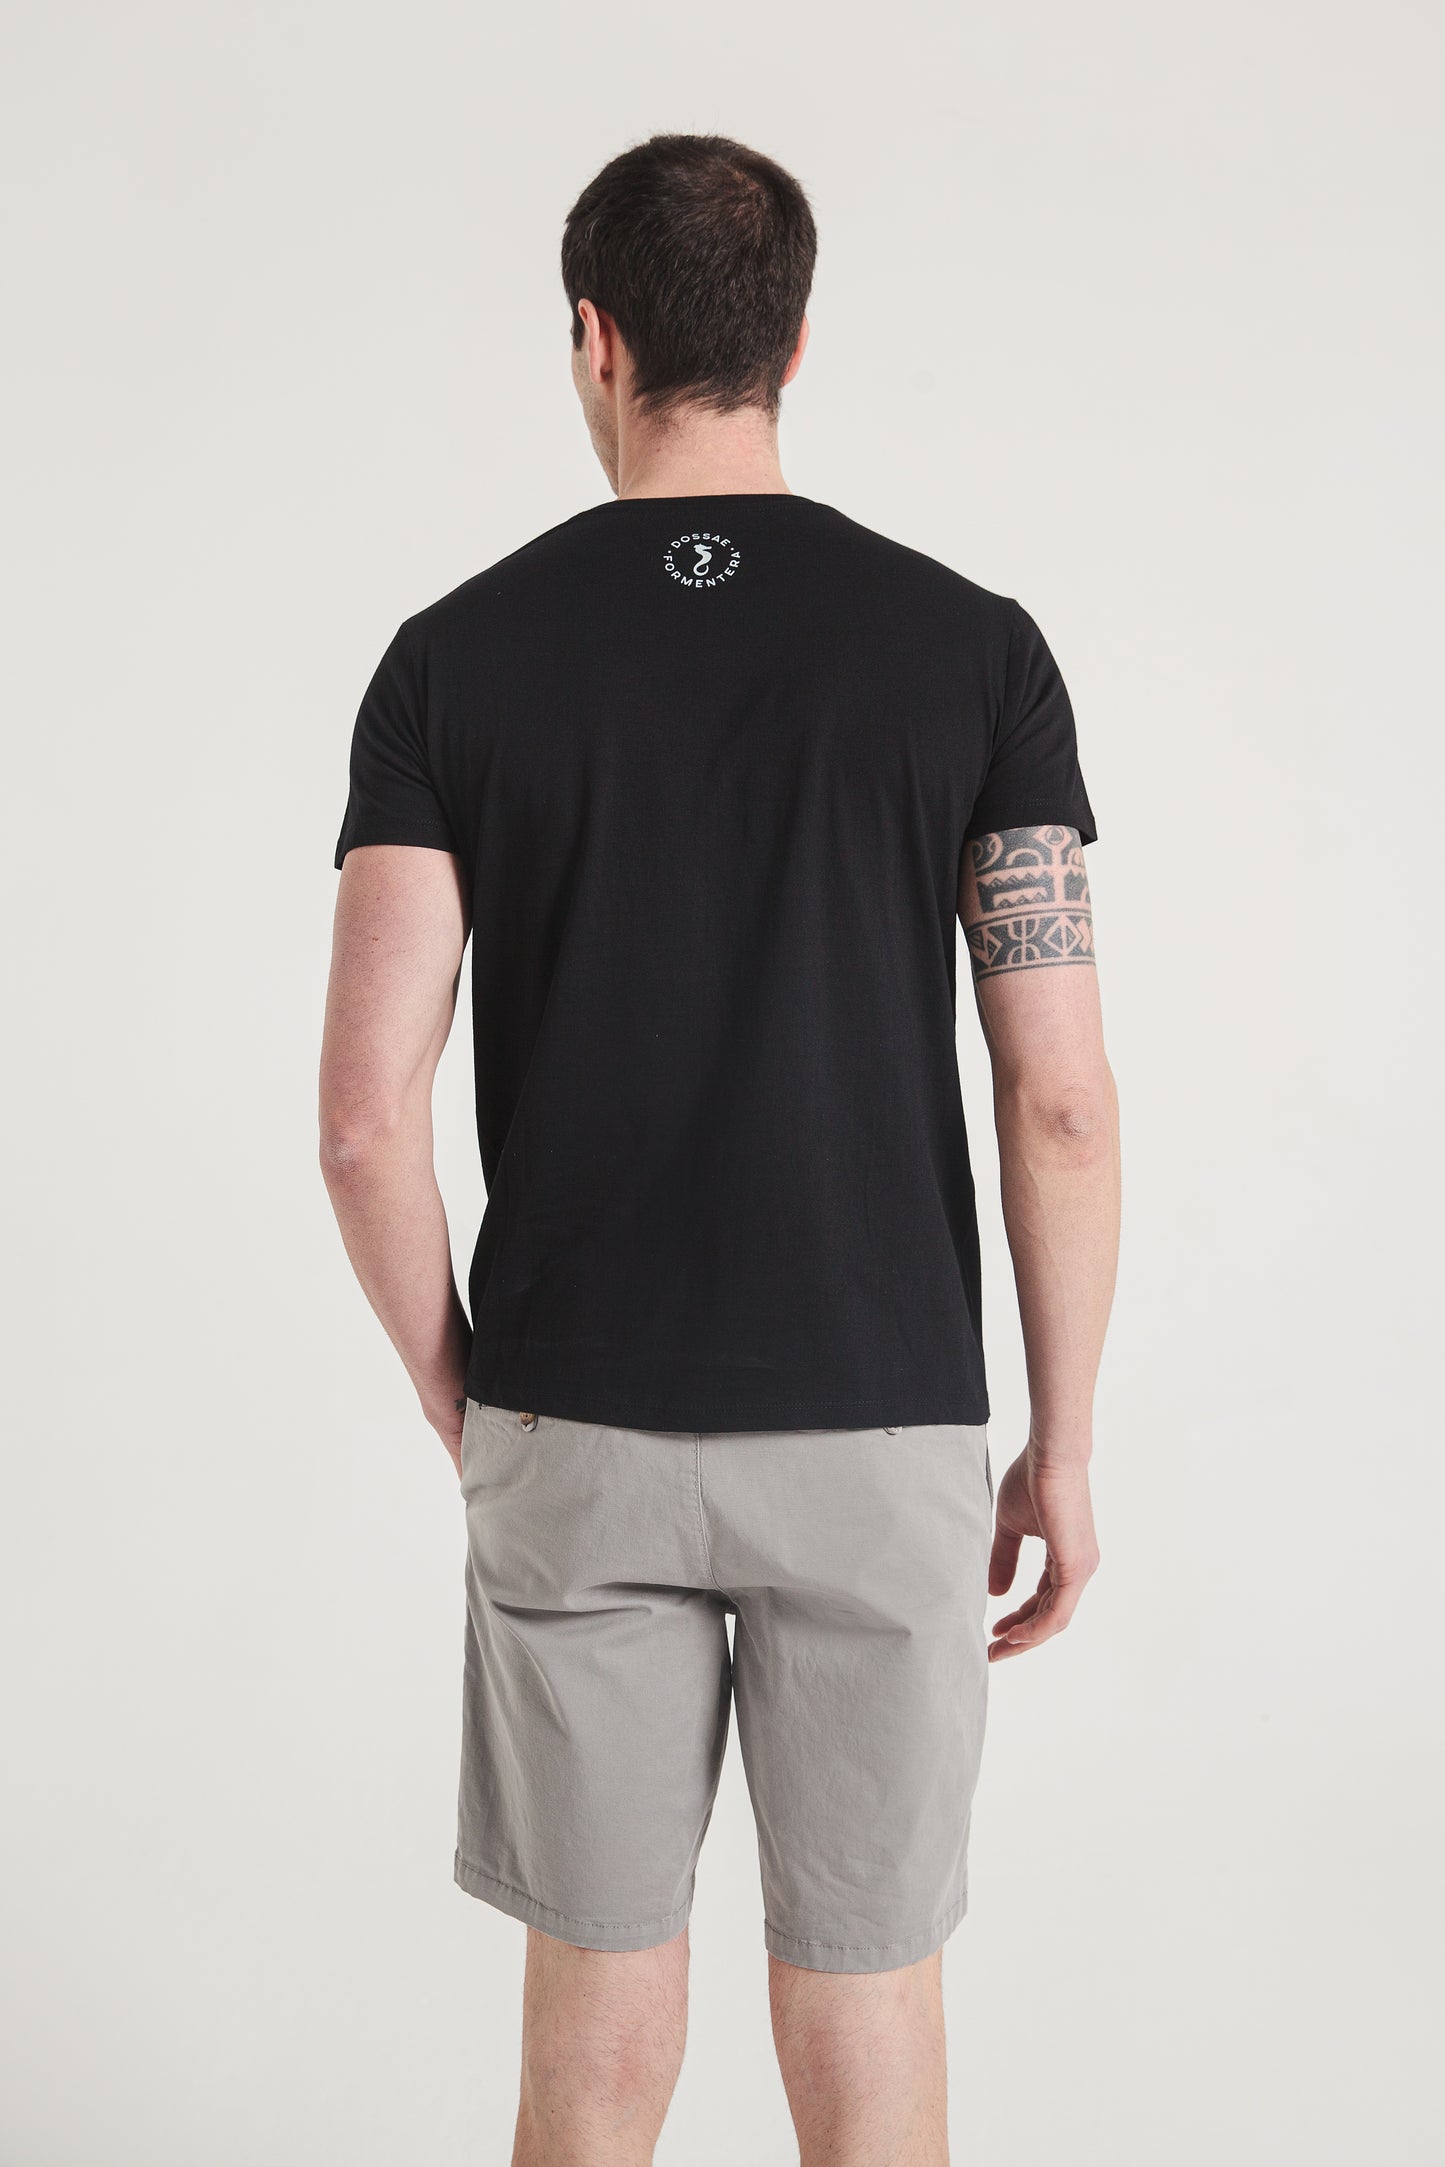 Pitiusas Black Bicycle T-shirt